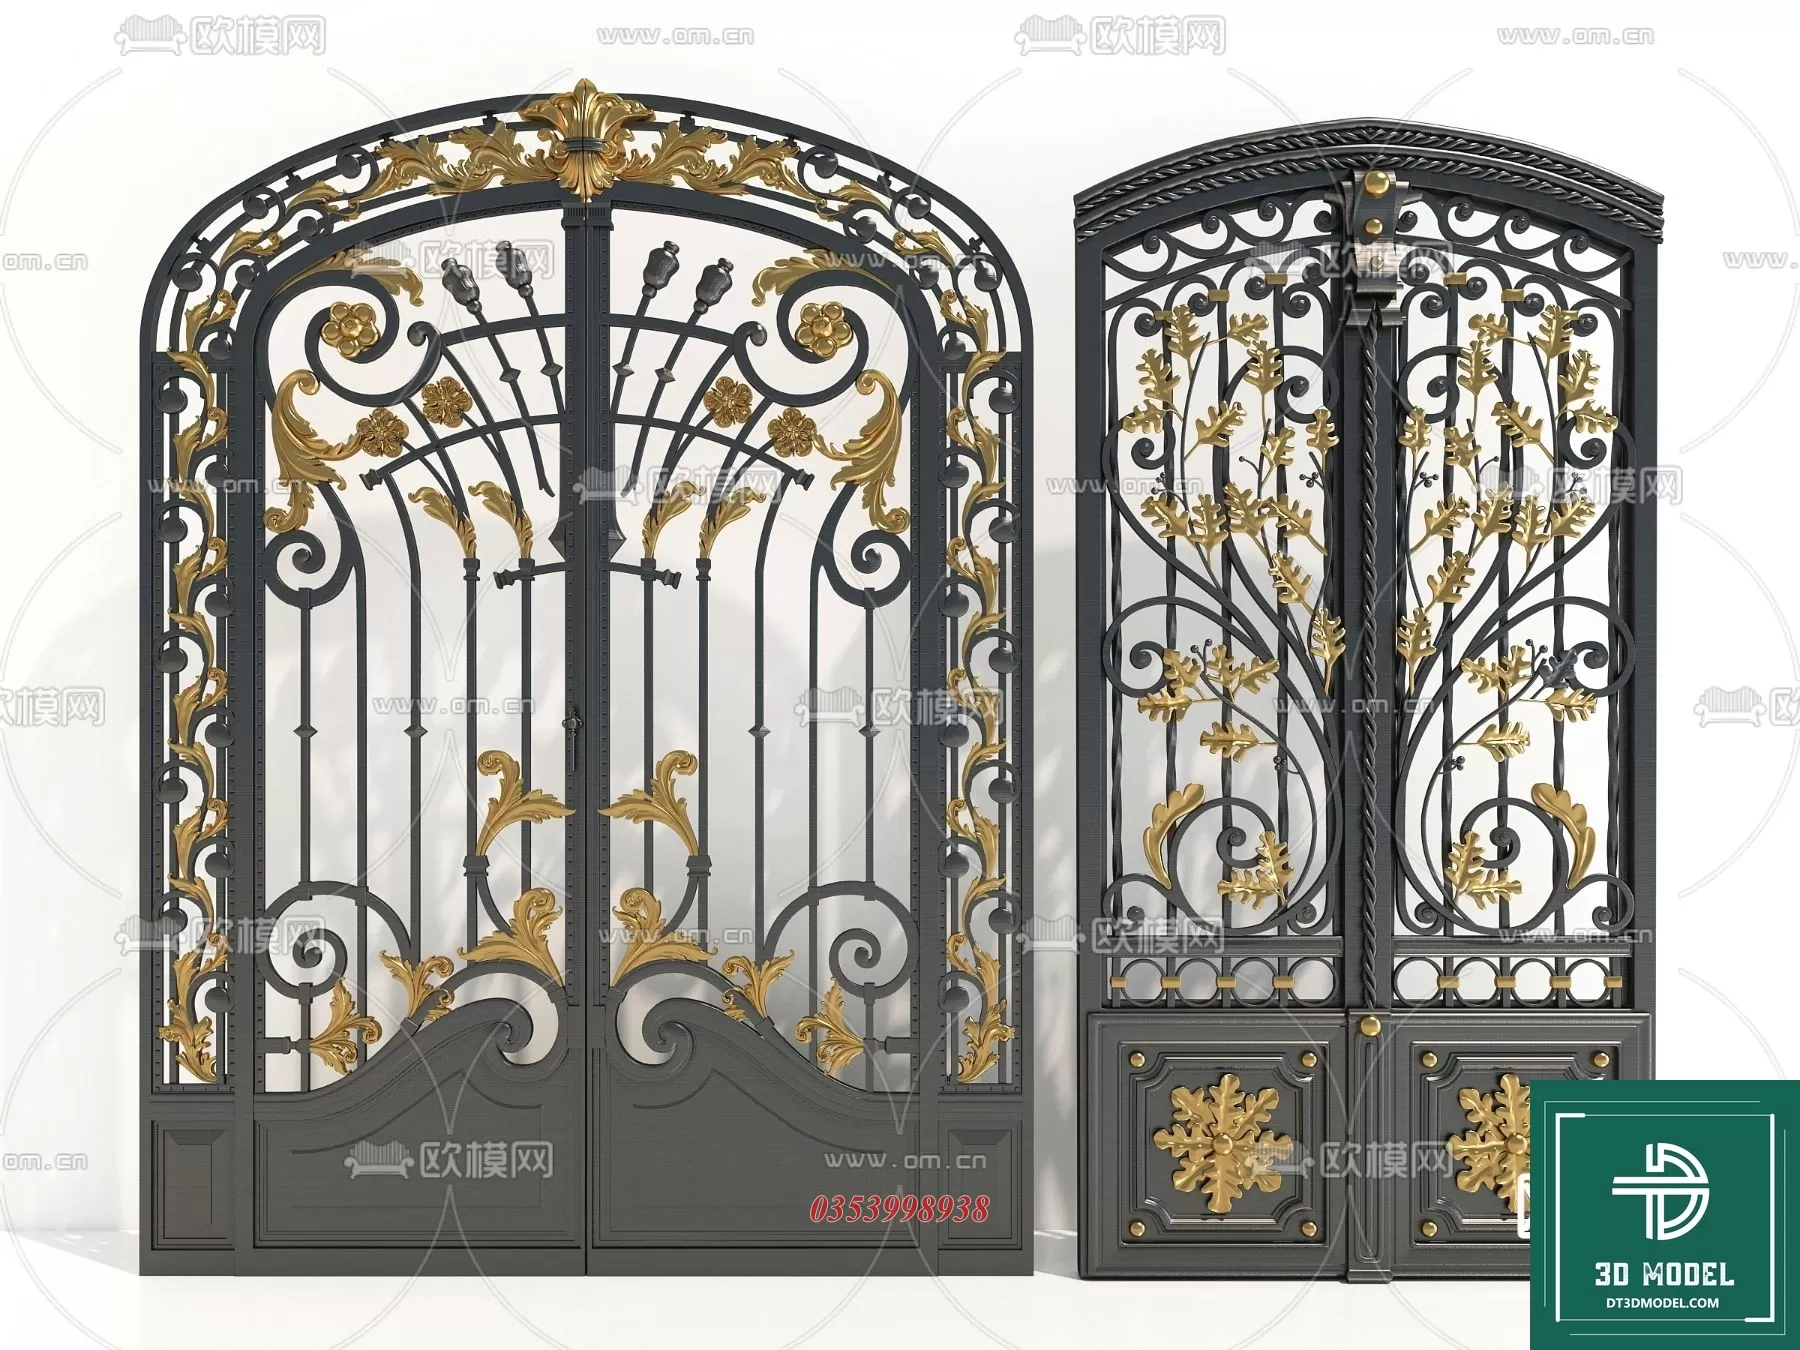 CLASSIC GATE – 3D MODELS – 075